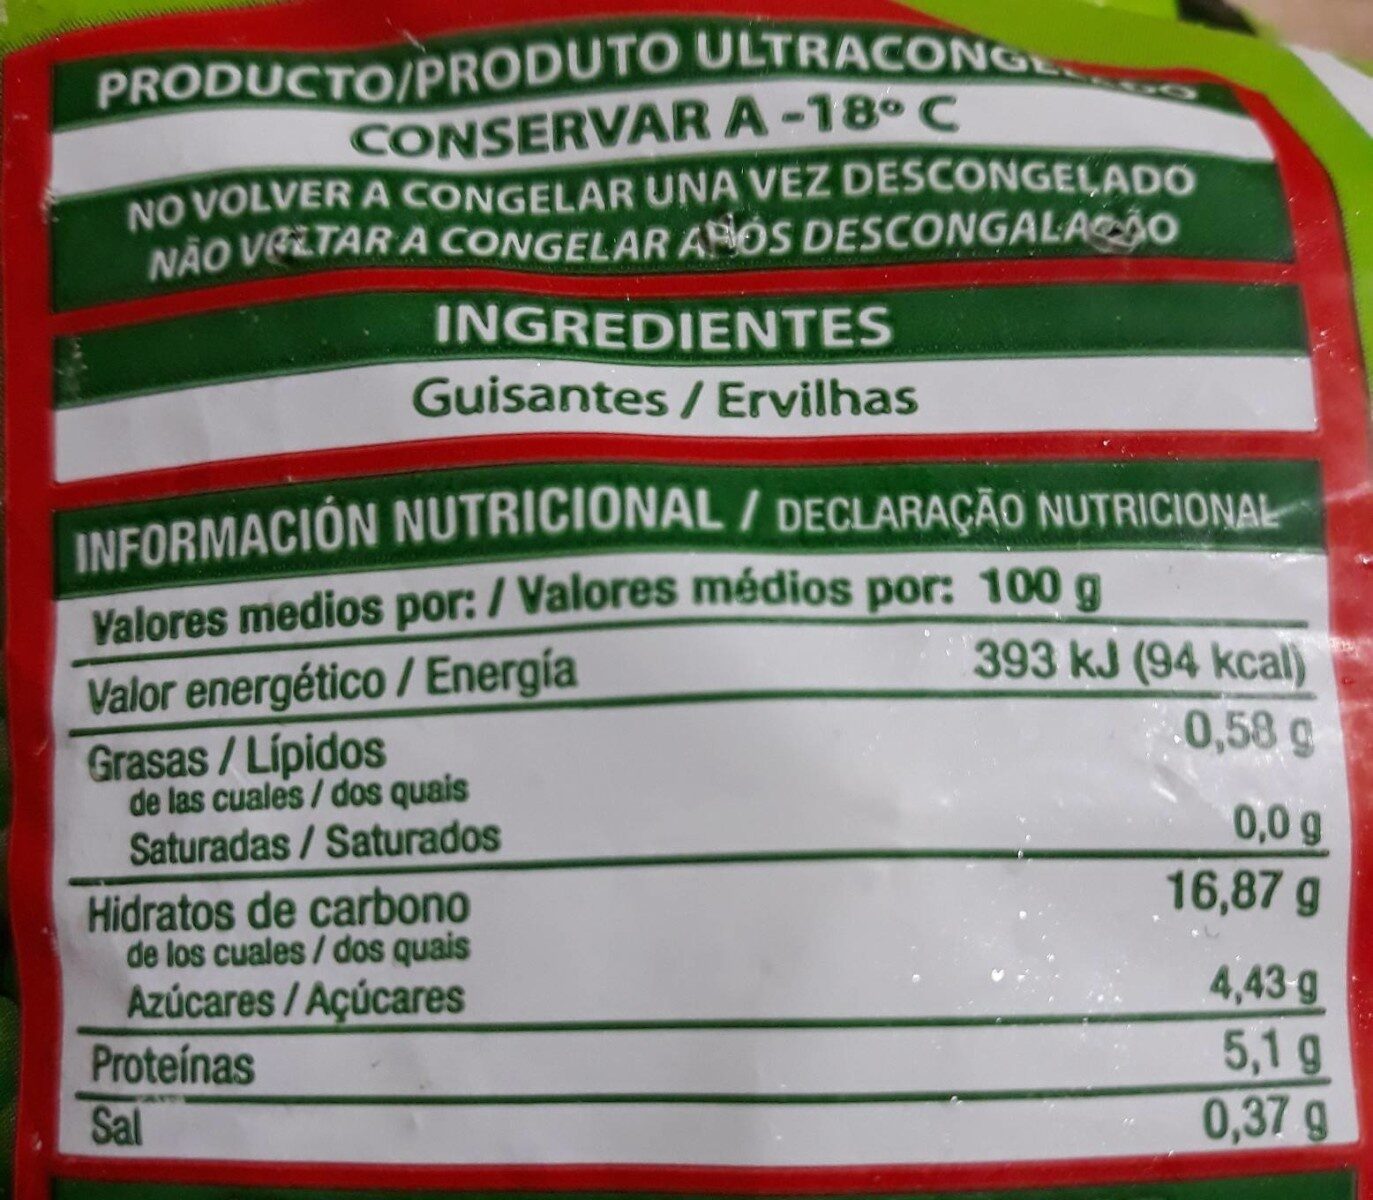 Guisantes ervilhas - Informació nutricional - es